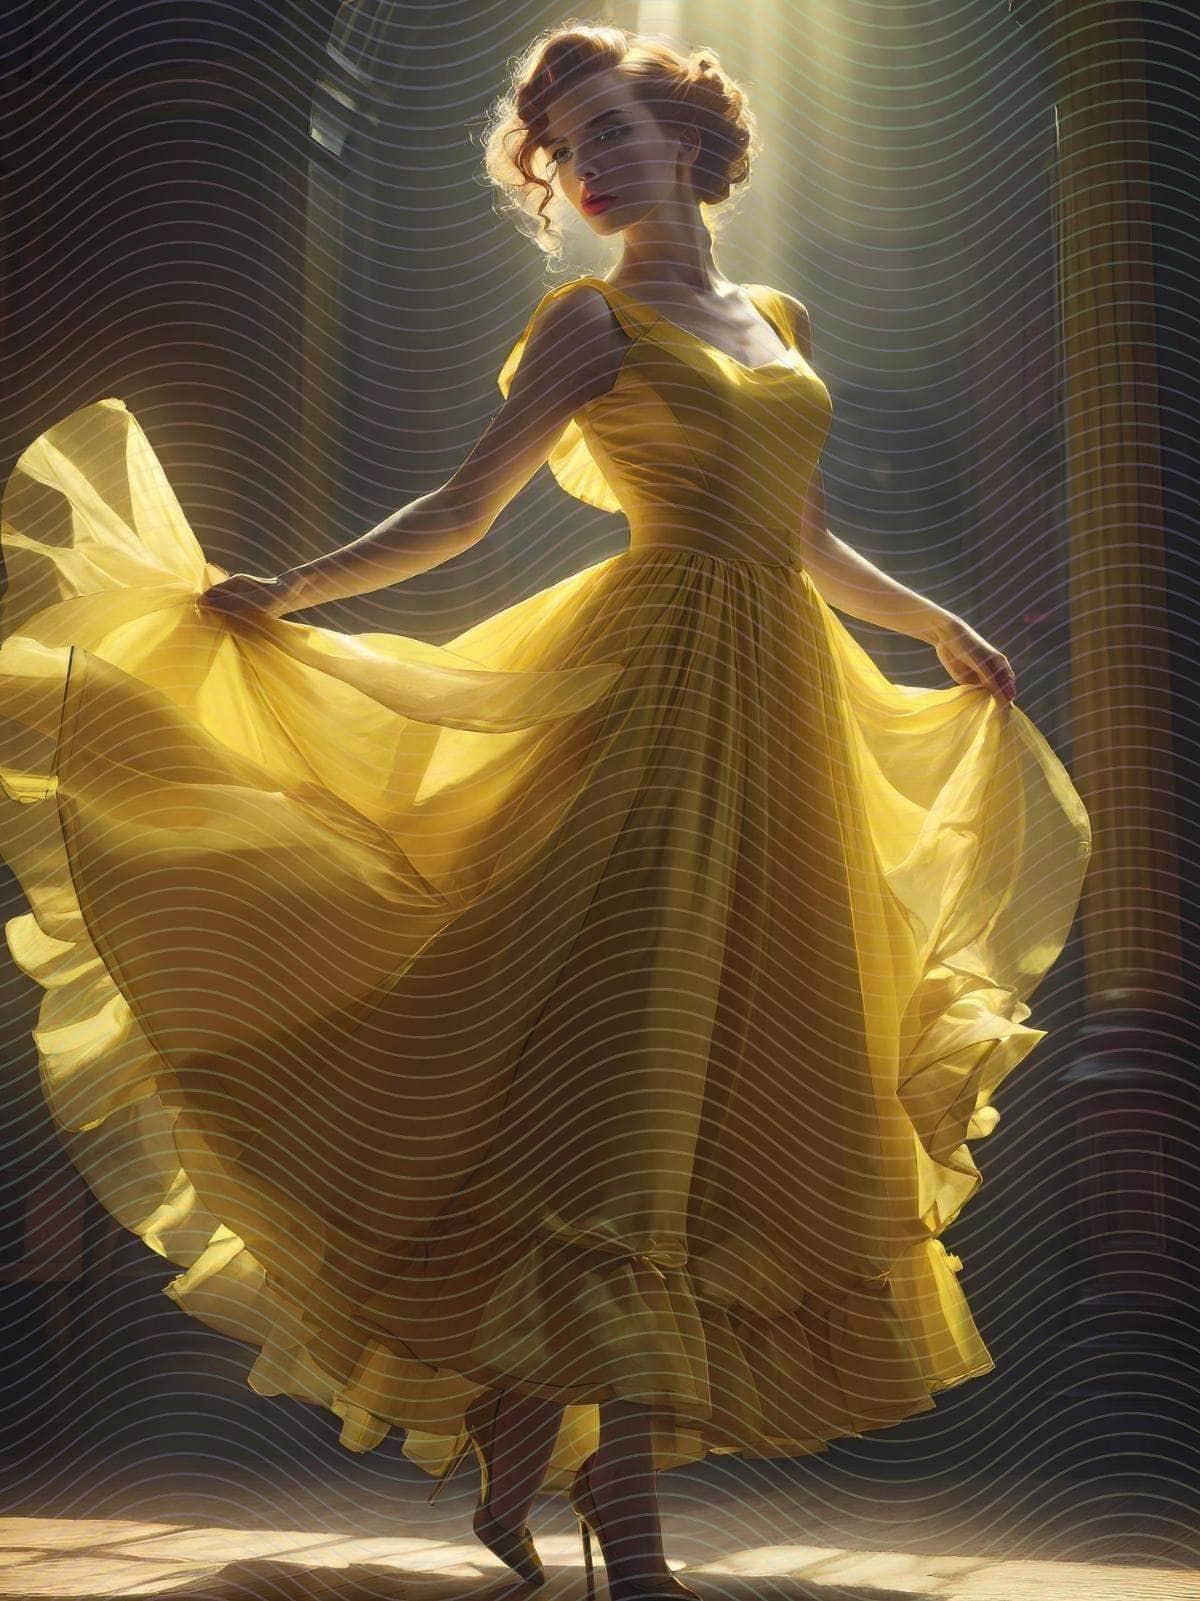 A Stunning Woman in Yellow Light Posing